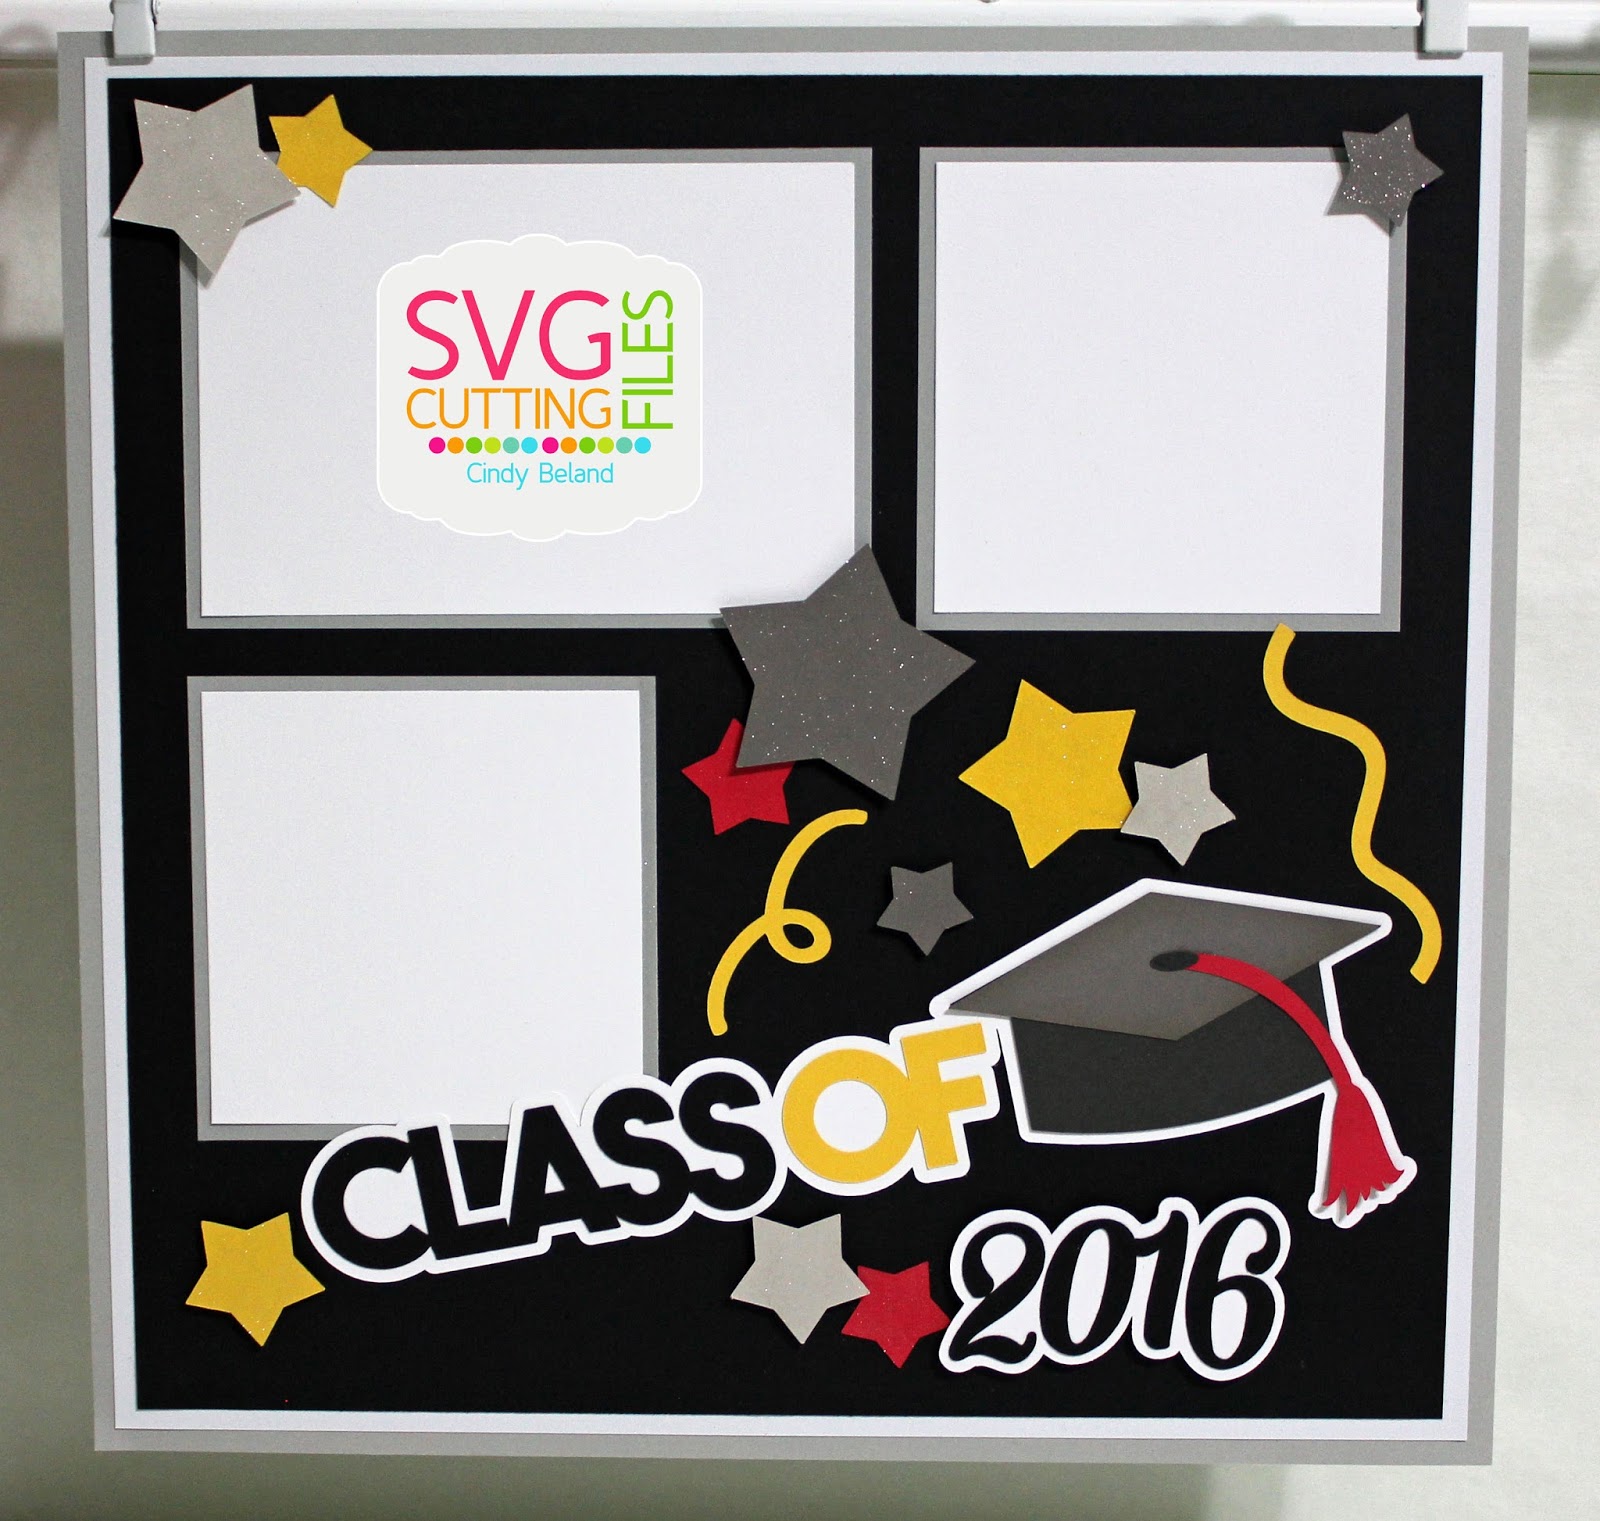 Download SVG Cutting Files: Happy Graduation!!!